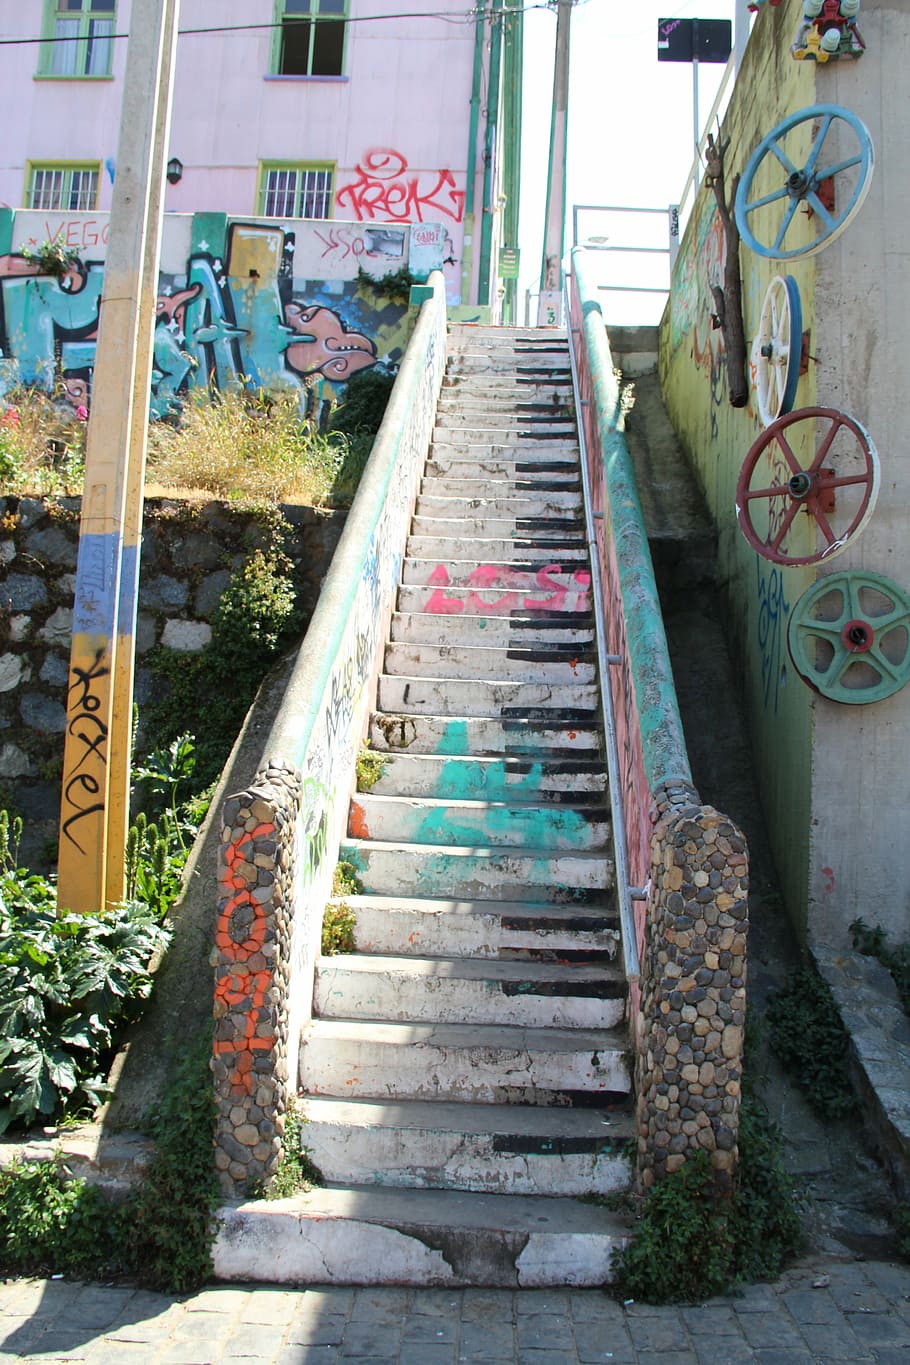 escaleras, arte urbano, valparaíso, vandalismo, edificios sucios, barrio sucio, arquitectura, estructura construida, escalera, graffiti